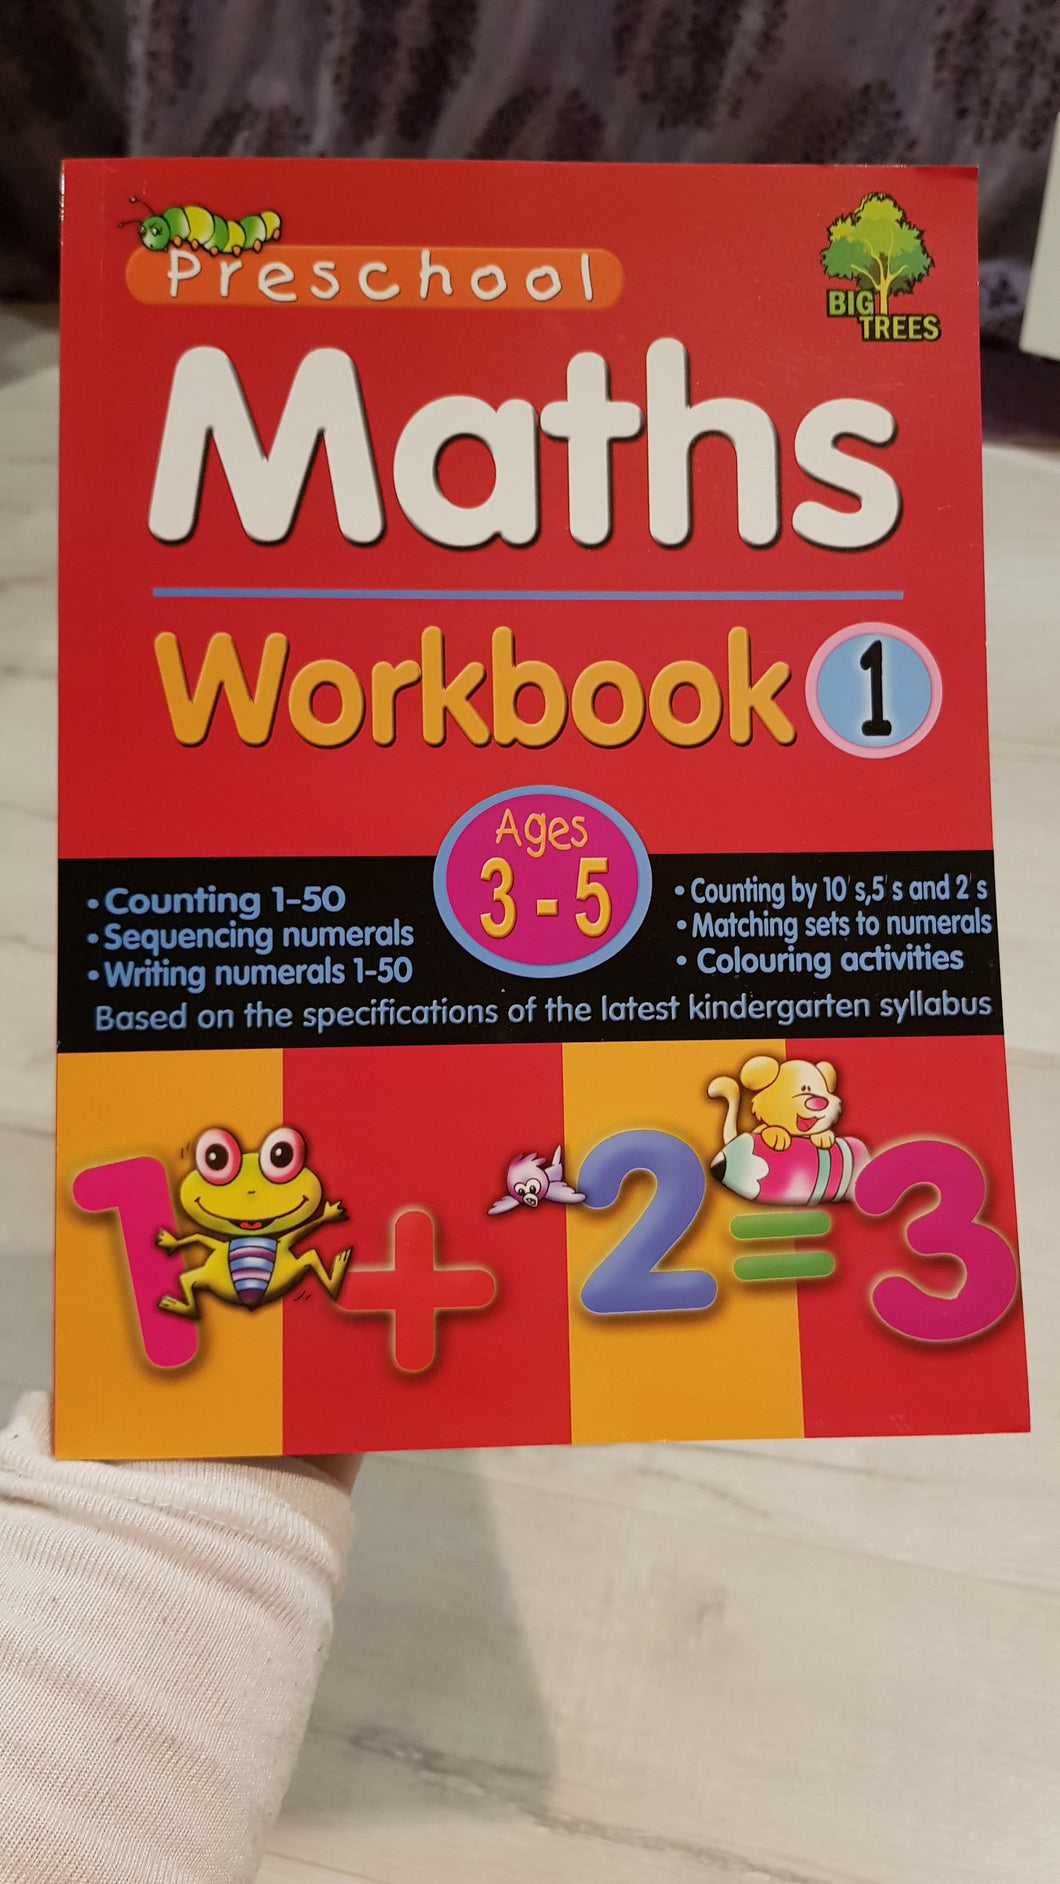 PRE-SCHOOL MATHS WORKBOOK 1 AGE 3-5